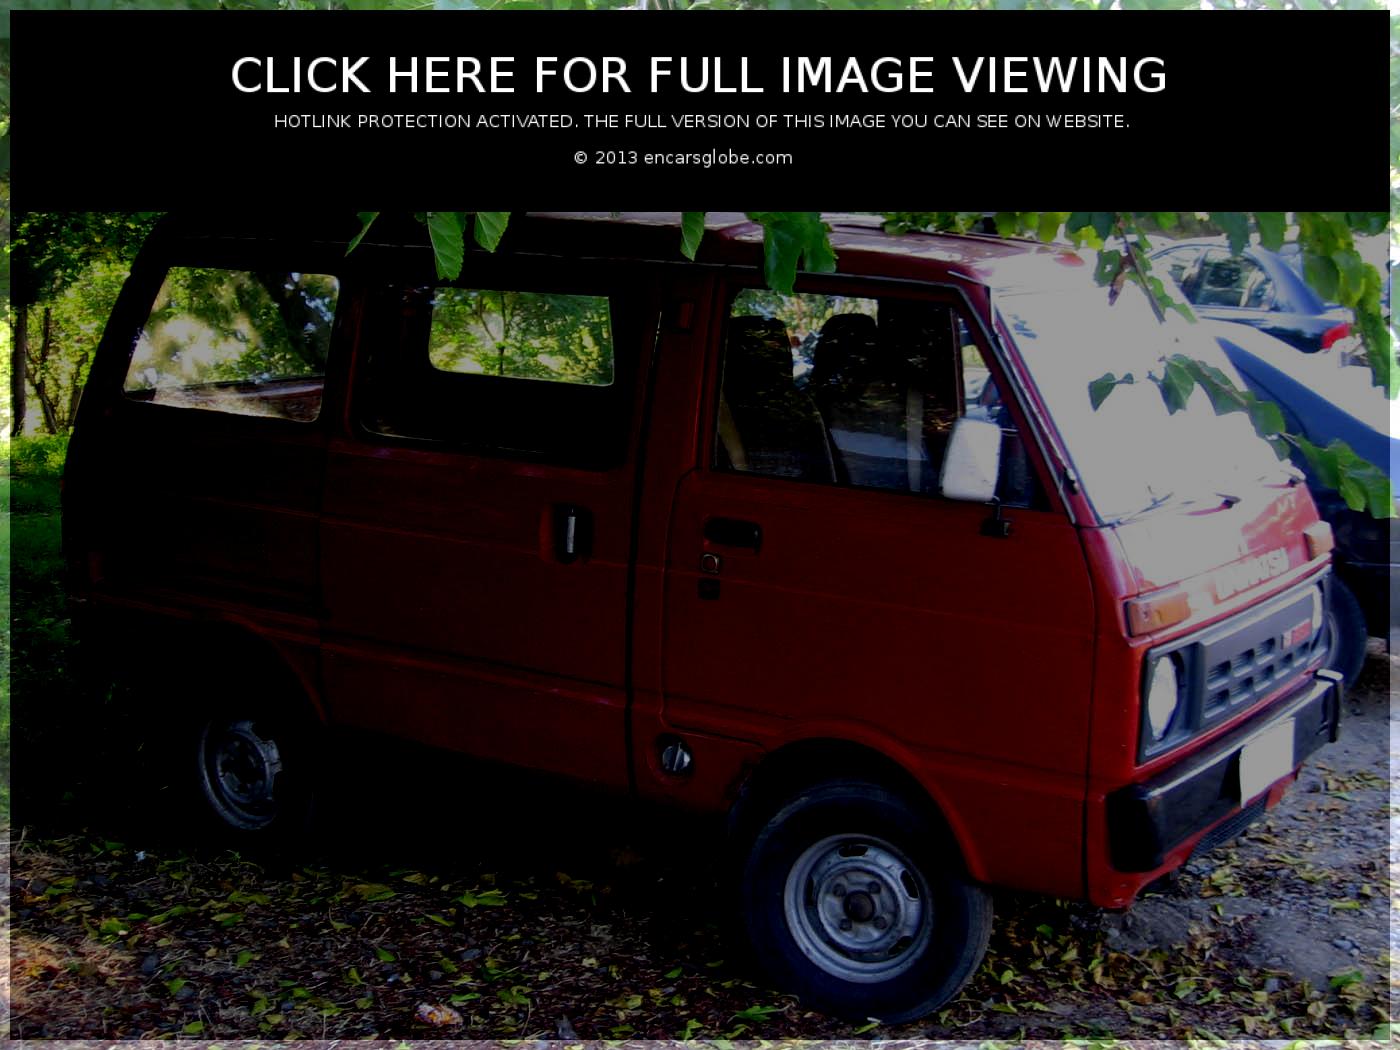 Daihatsu 850 Cab Photo Gallery: Photo #08 out of 8, Image Size ...